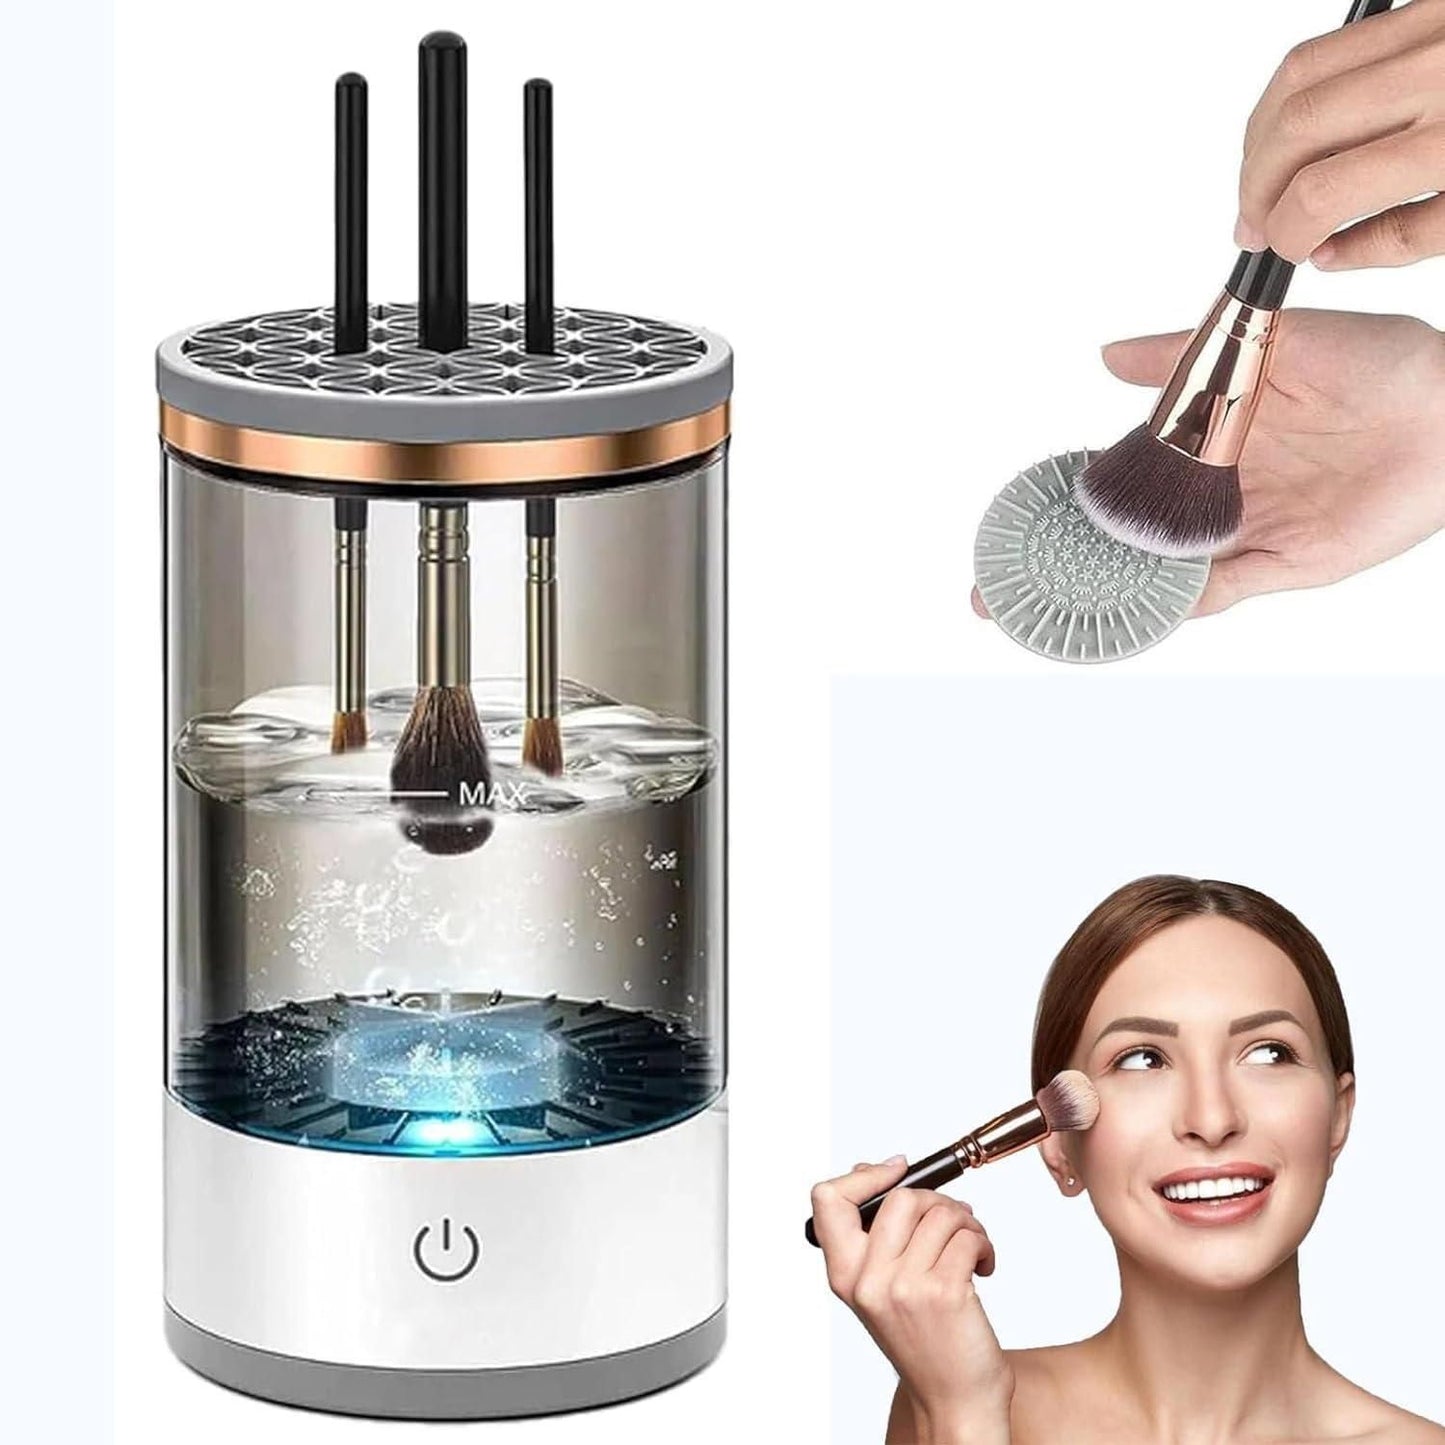 HomeWise Finds Makeup Brush Cleaner